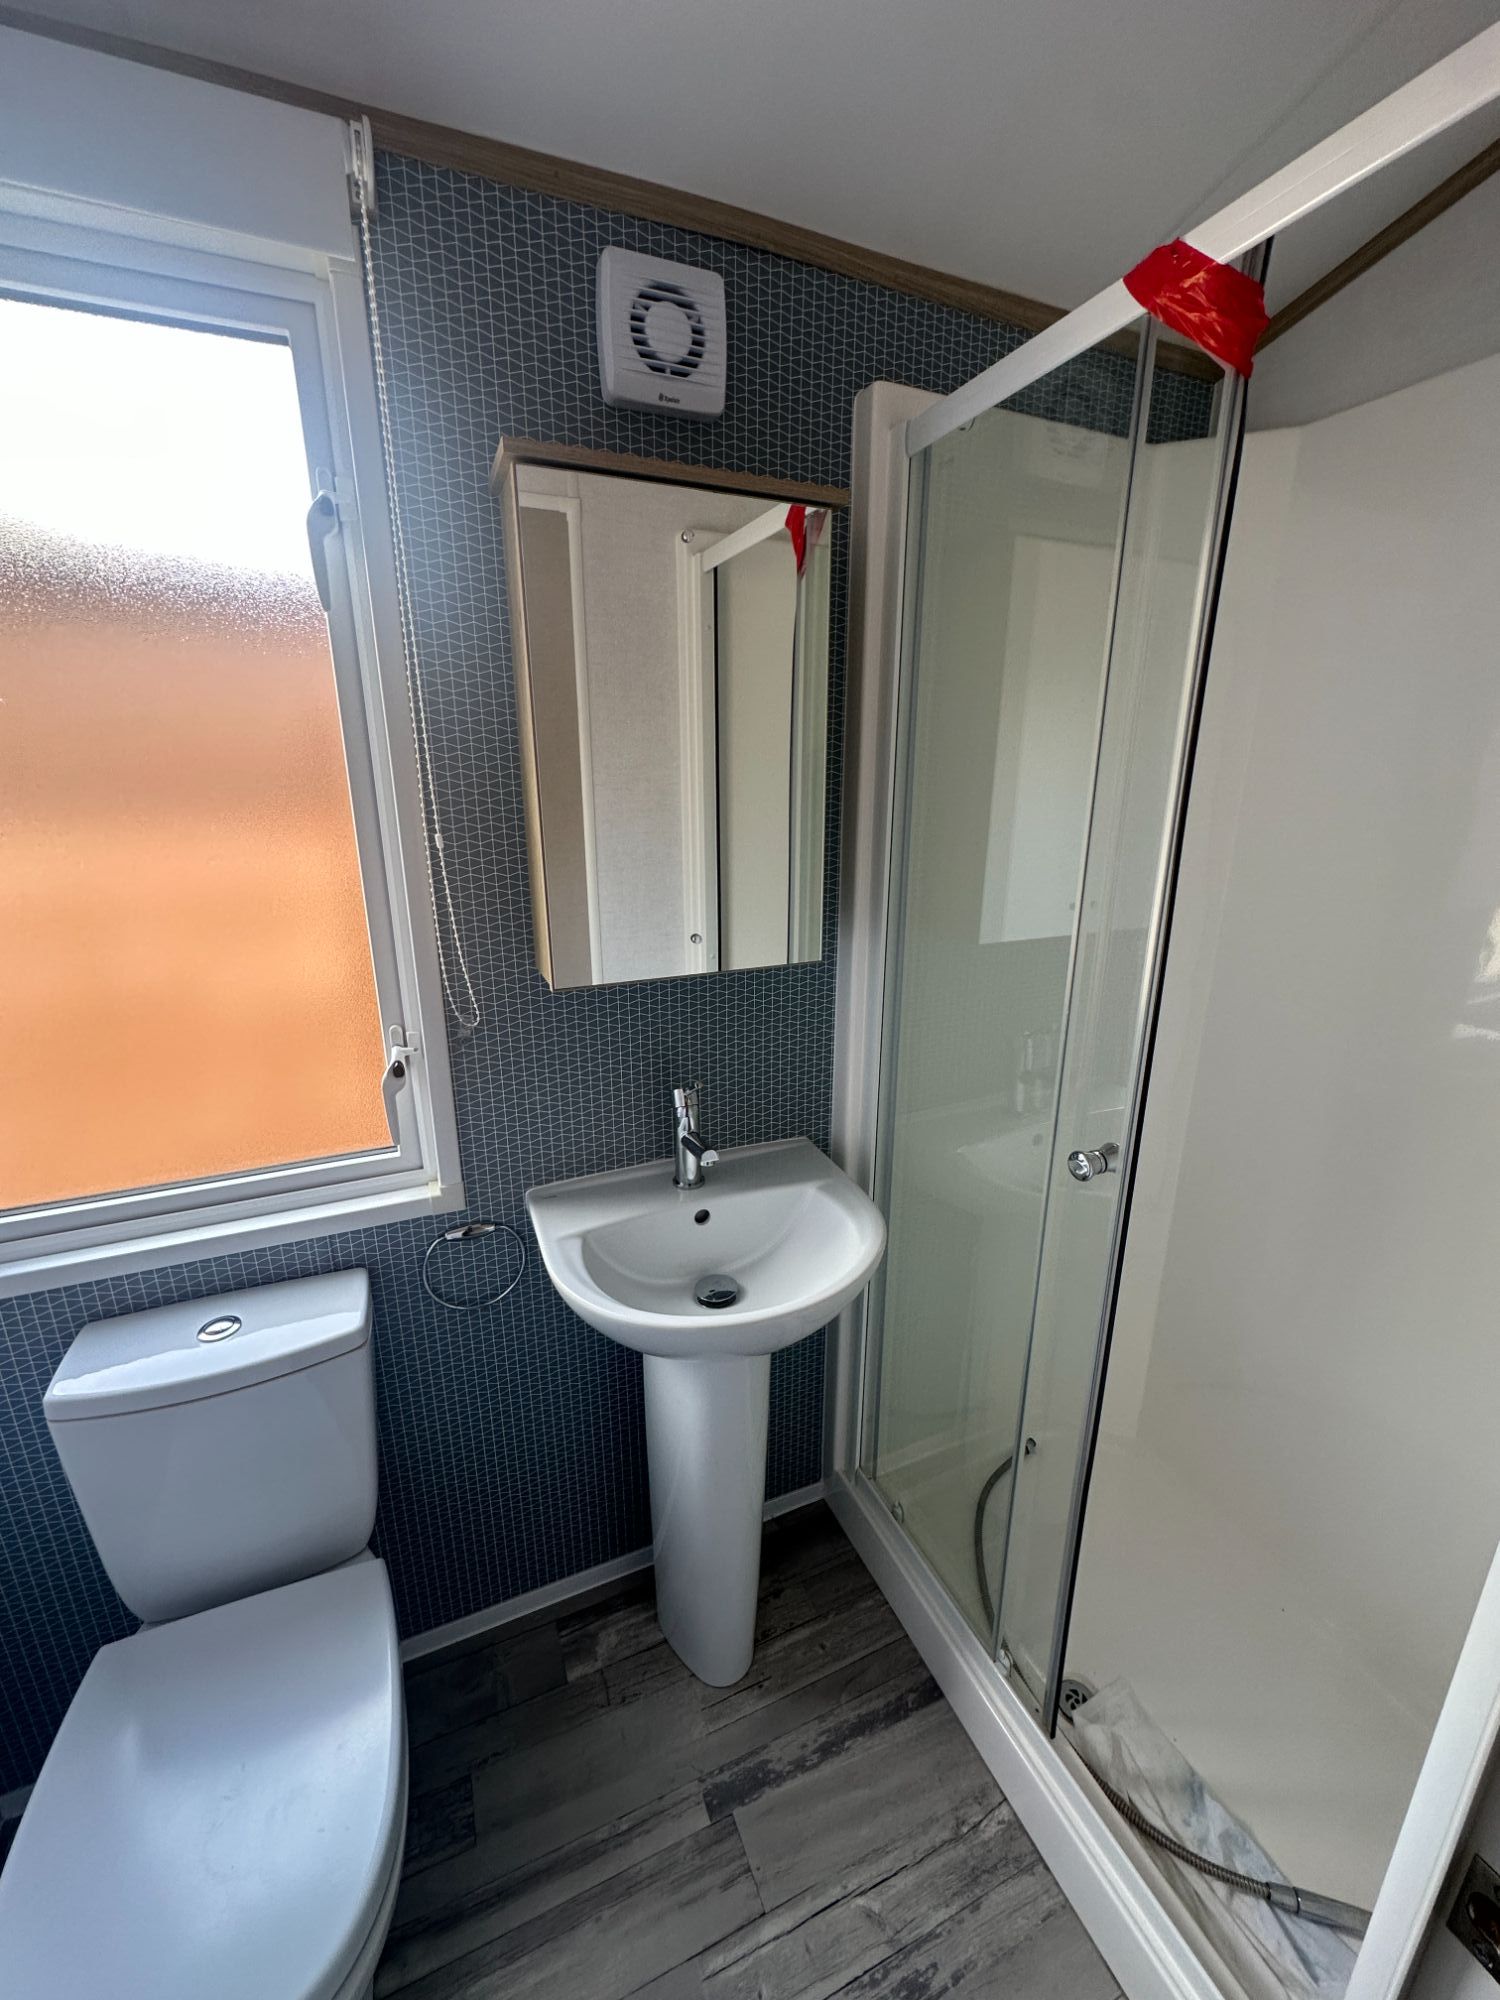 2021 Atlas Style Lodge Bathroom